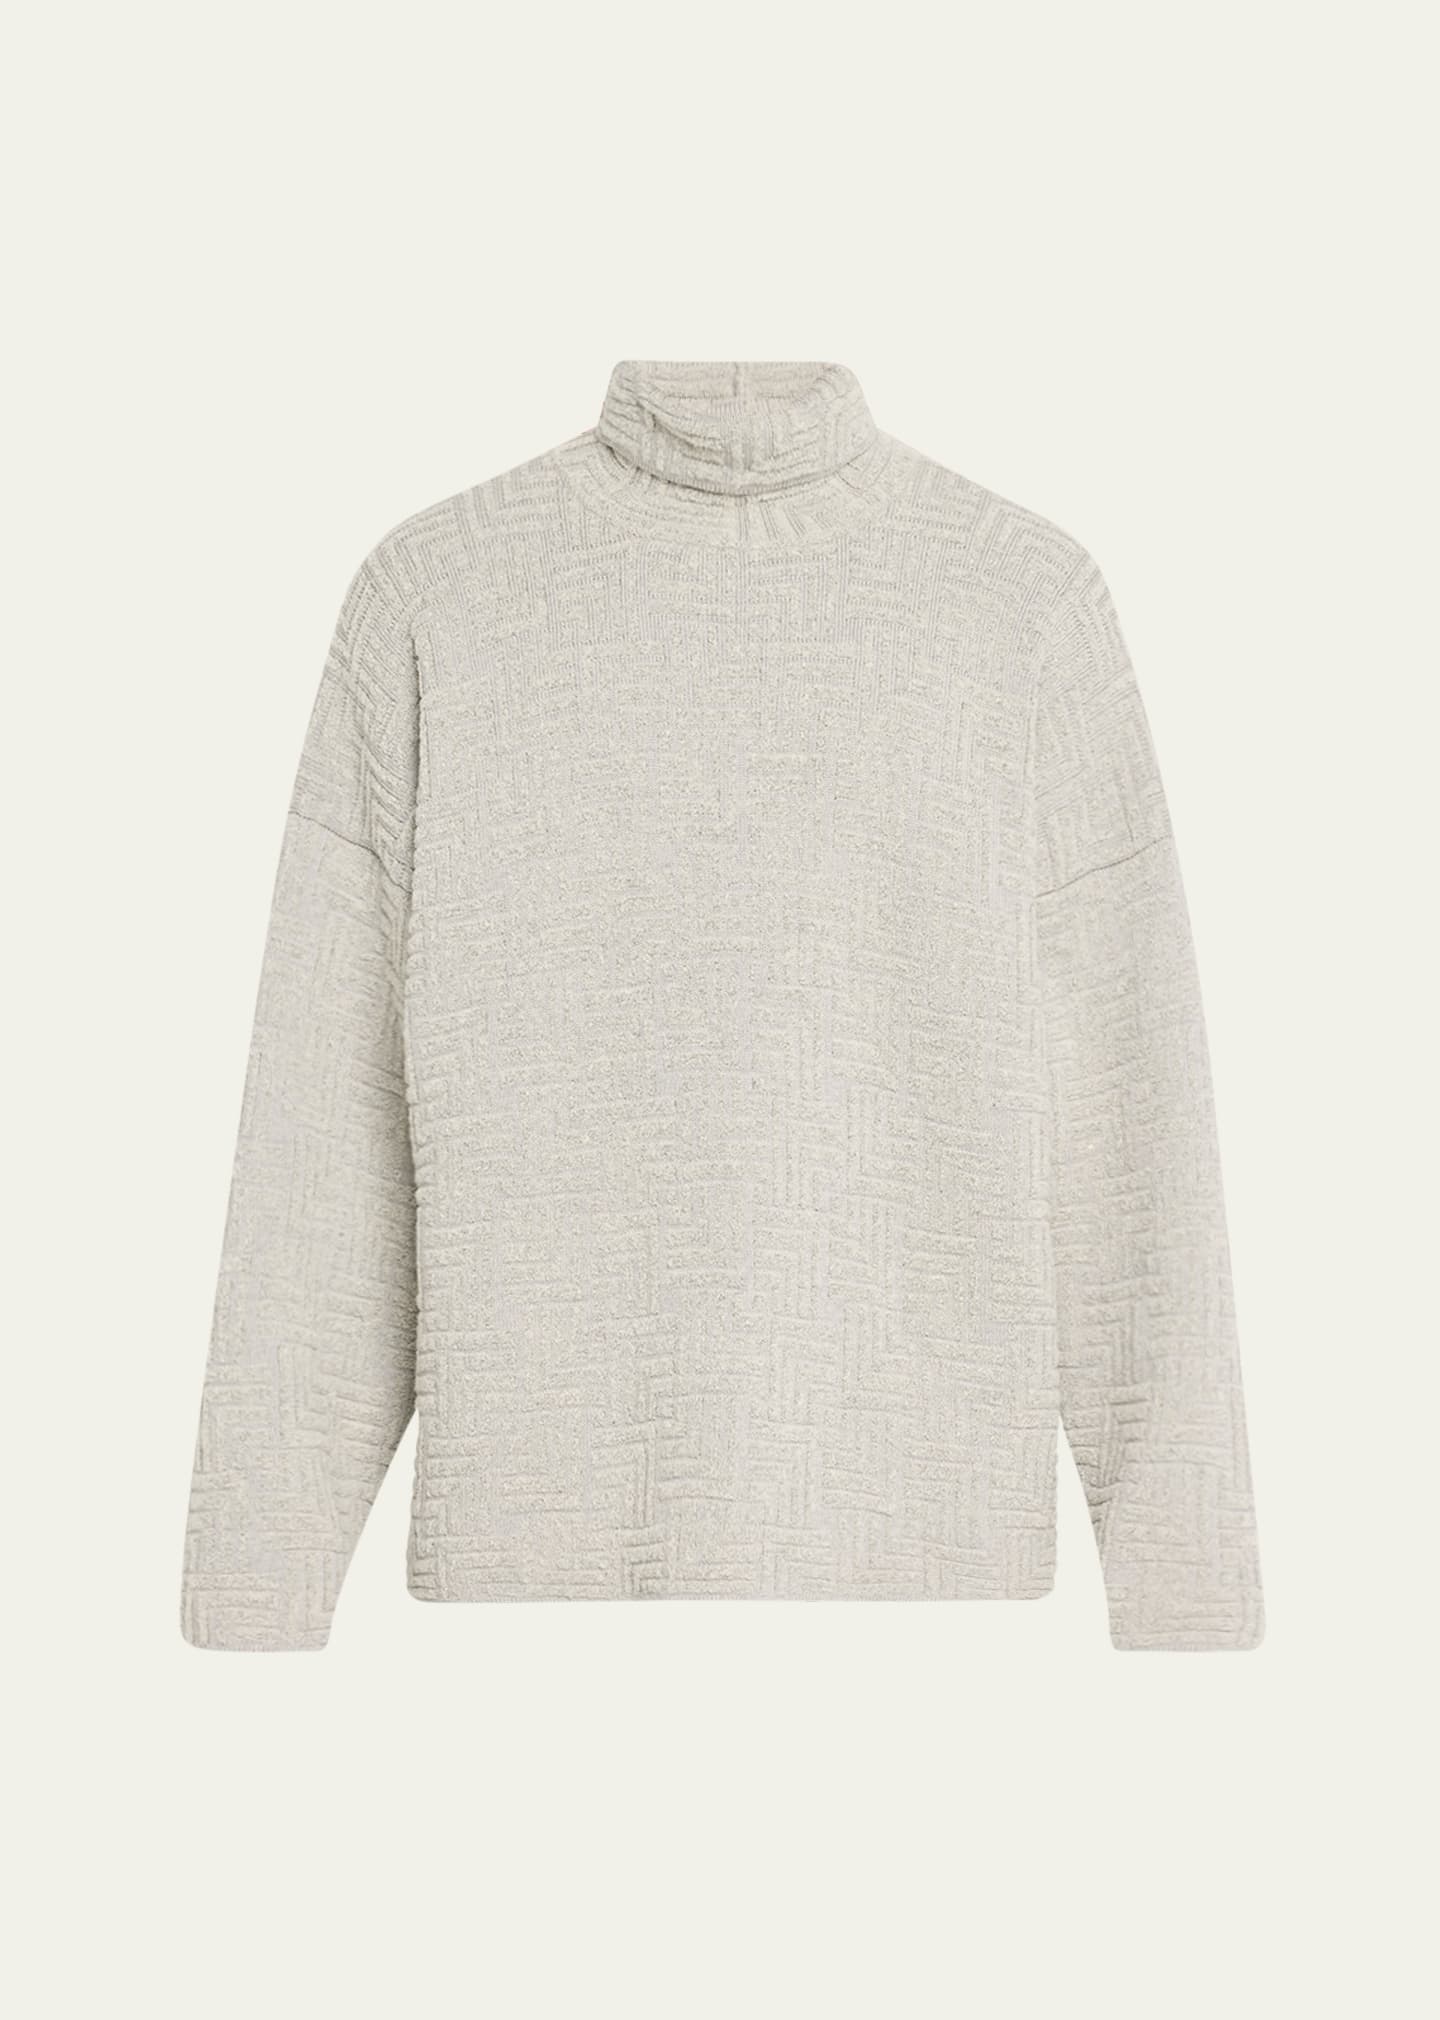 Men's Oversized Geometric Turtleneck Sweater